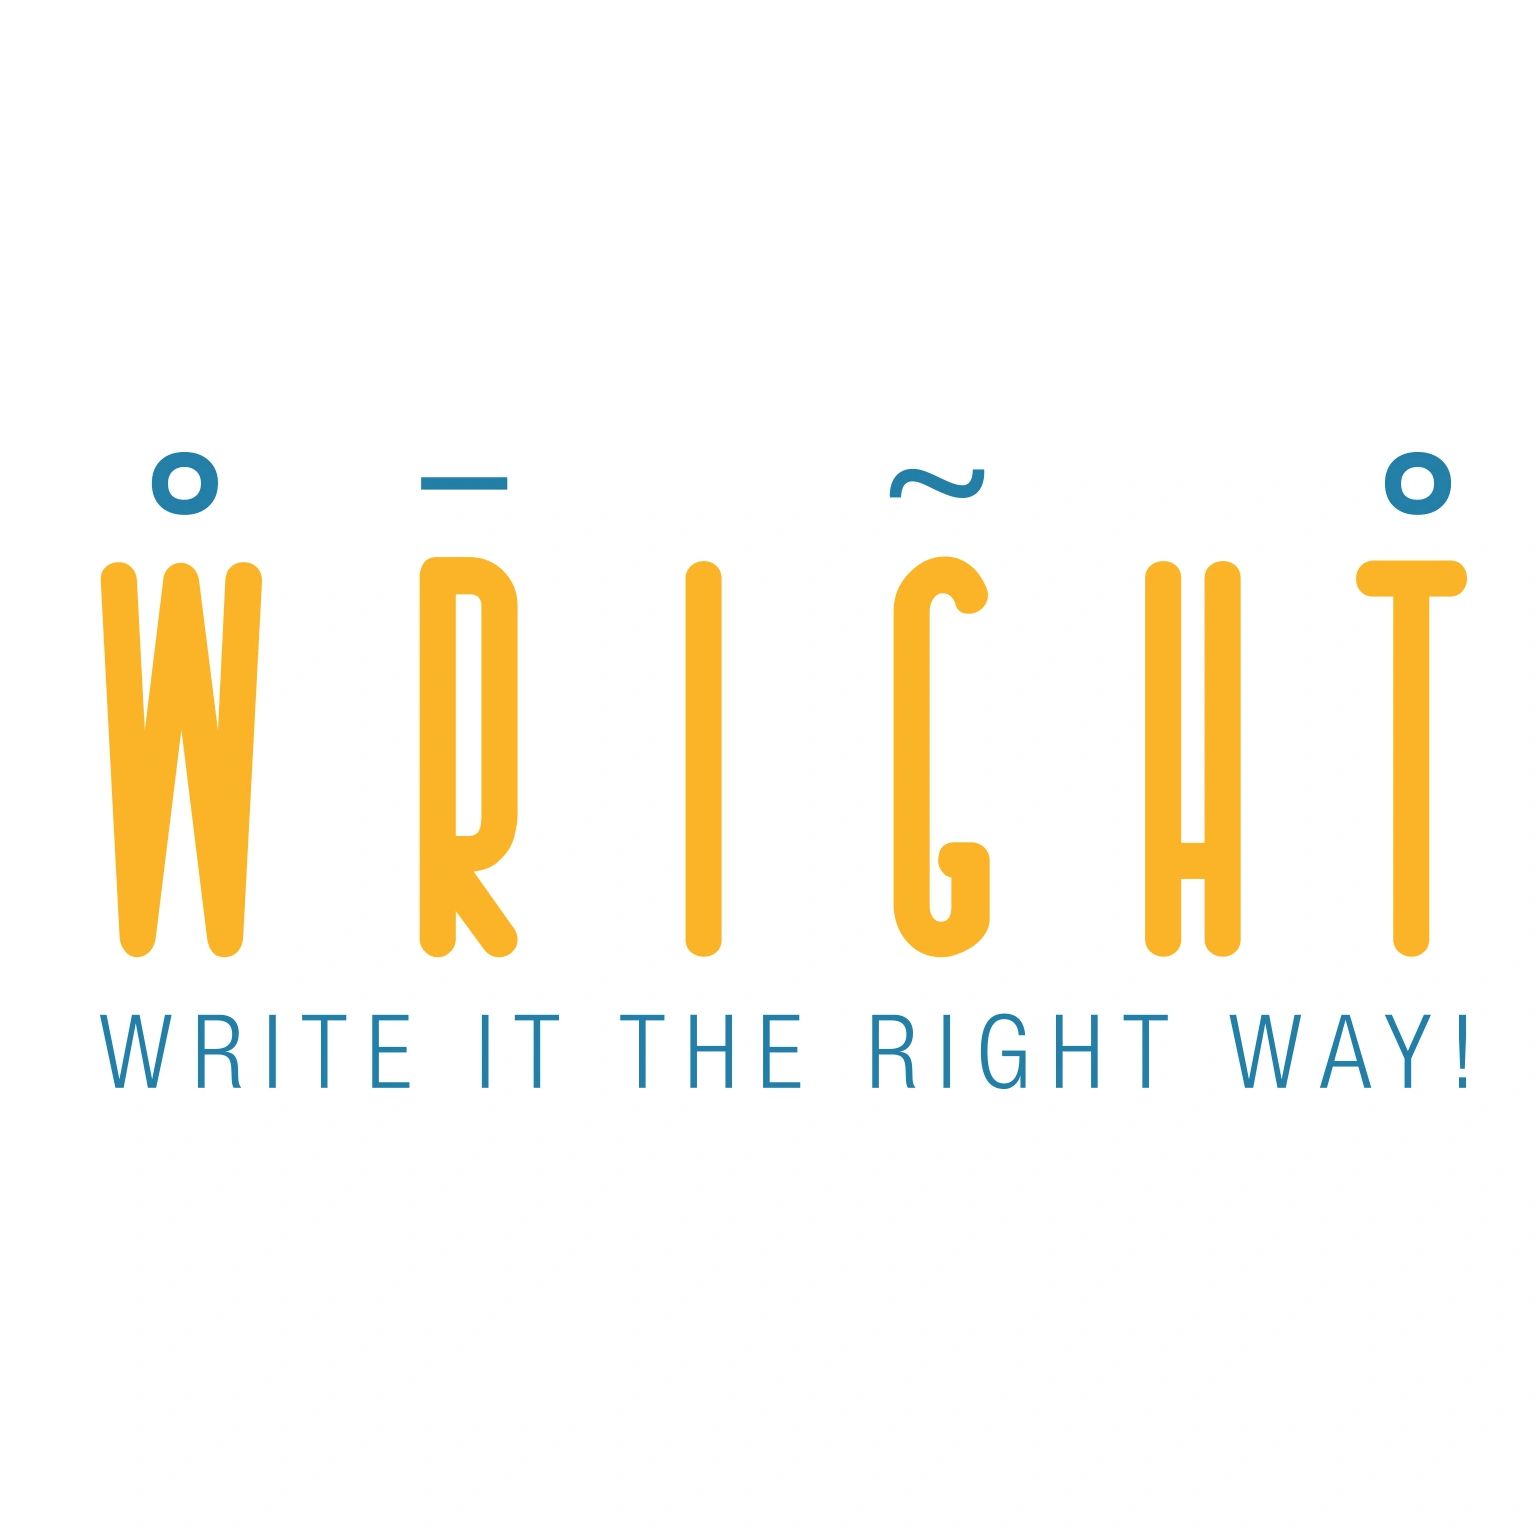 Wright, copywriting and translation